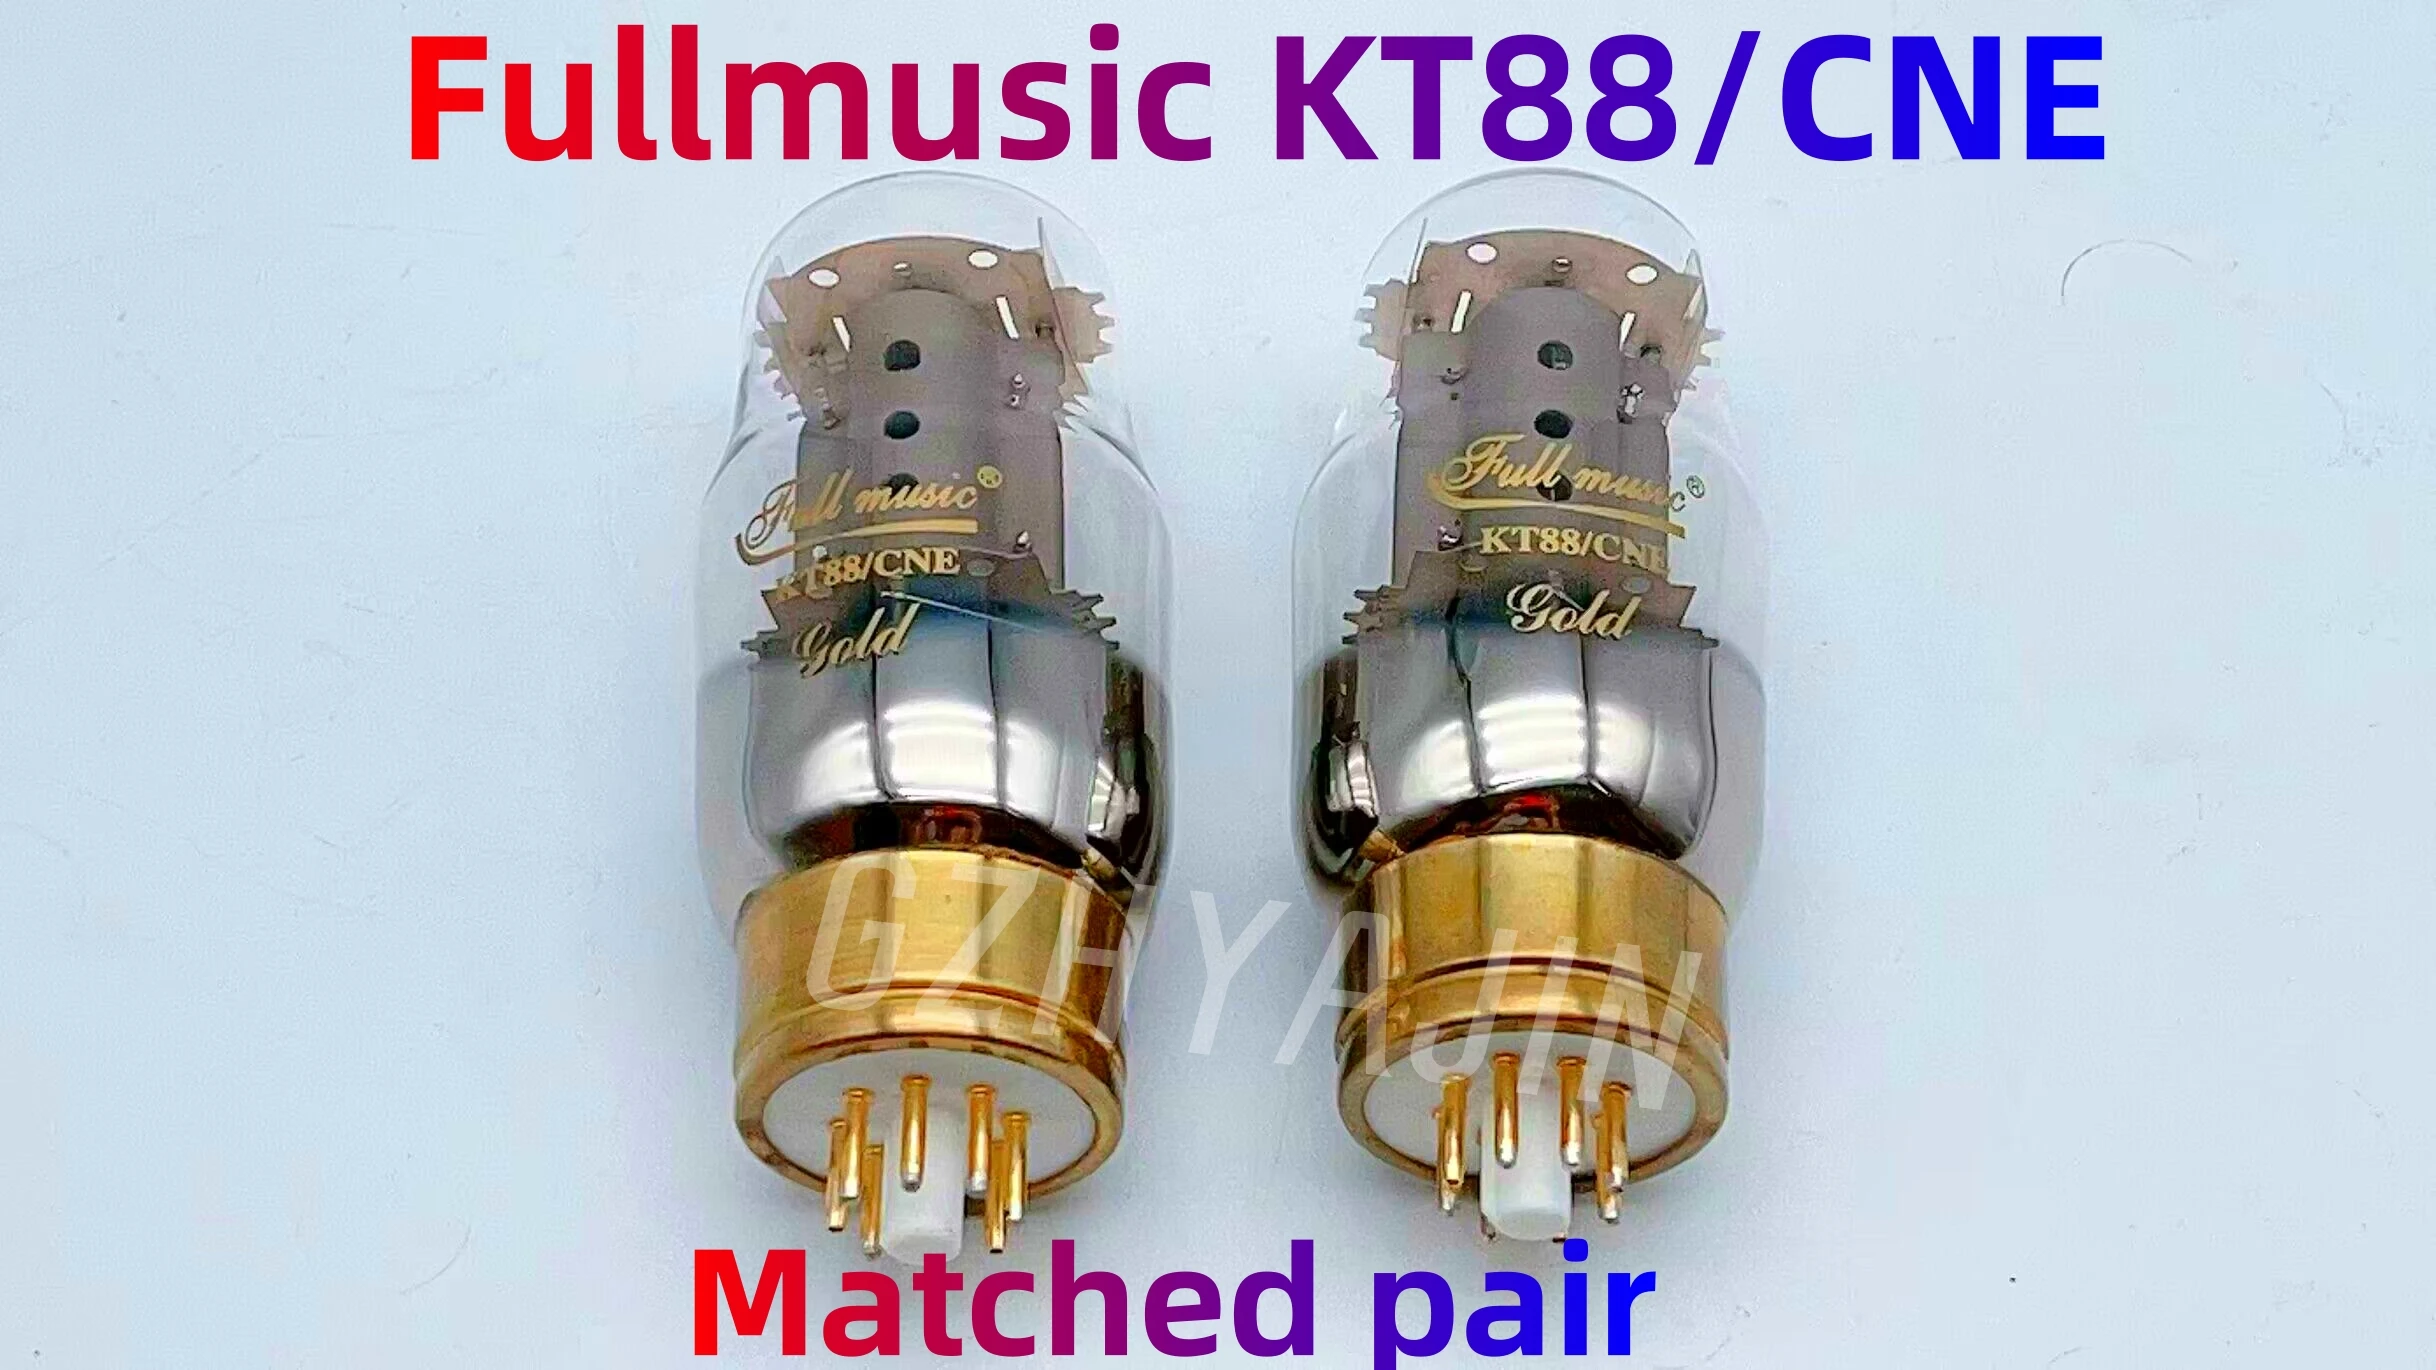 

2 PCS KT88 Full True TJ Fullmusic KT88 CNE Series Electronic Tube High Power Graphite Screen Excellent Sound